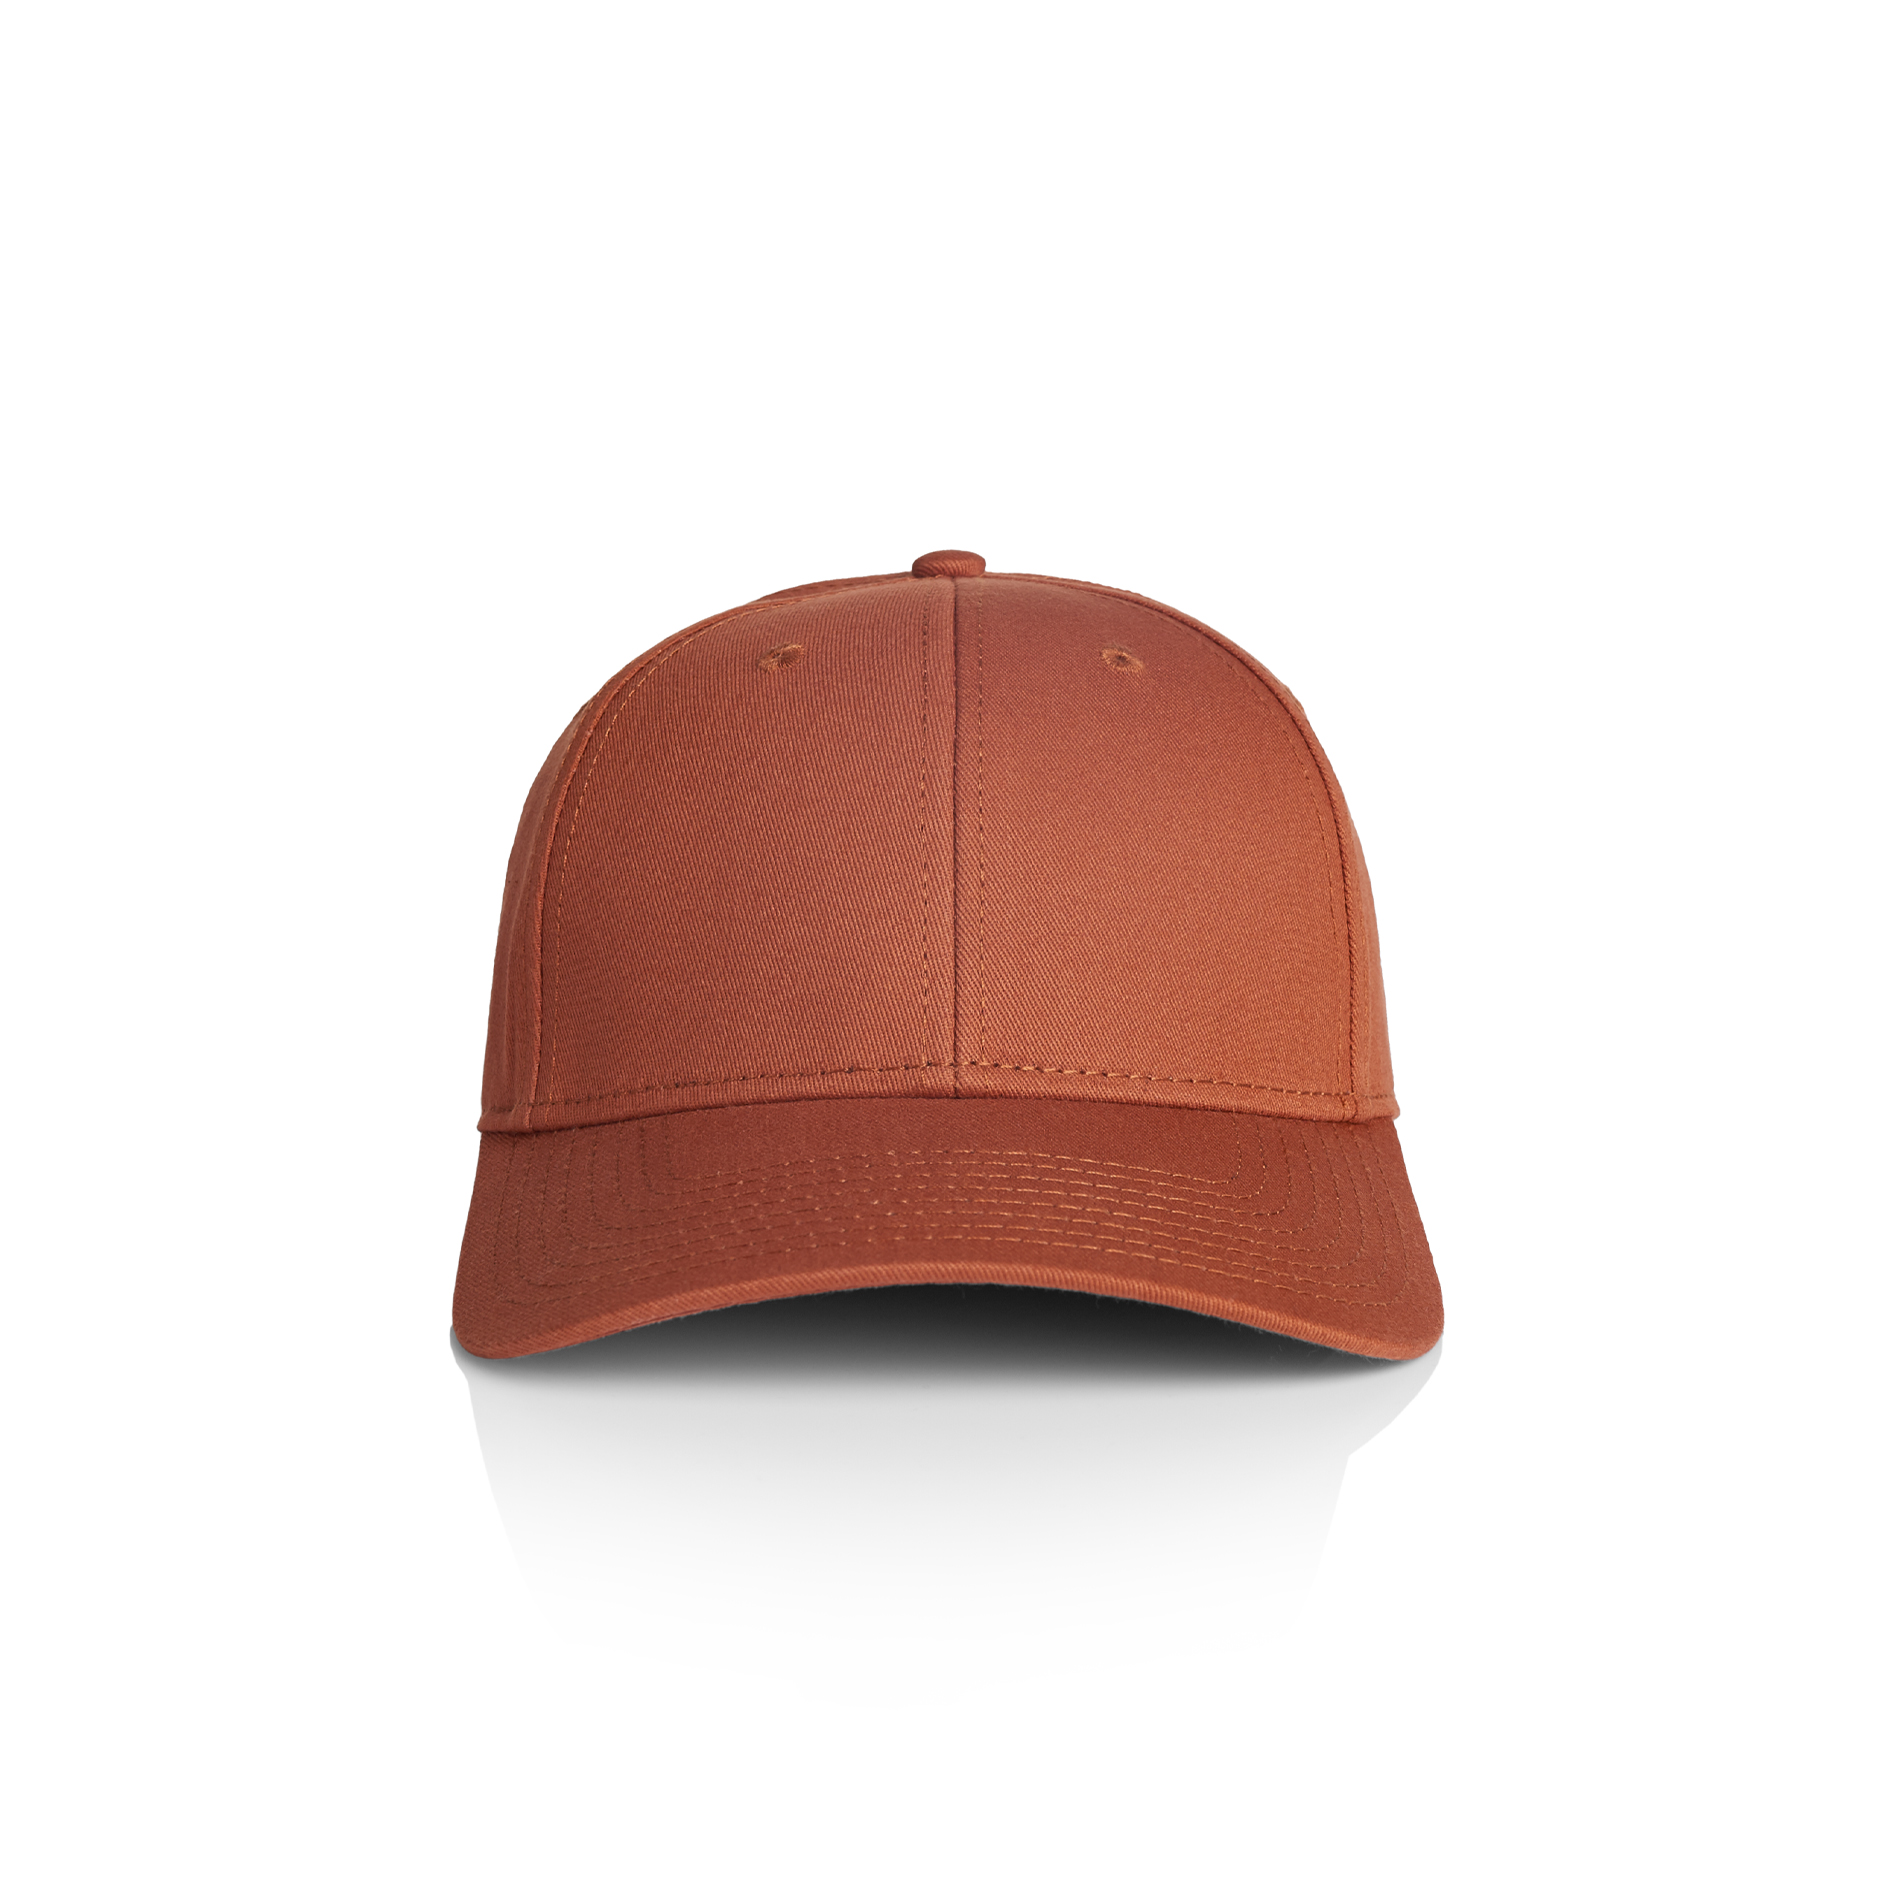 AS Colour Grade Cap - Copper - Uniform Edit